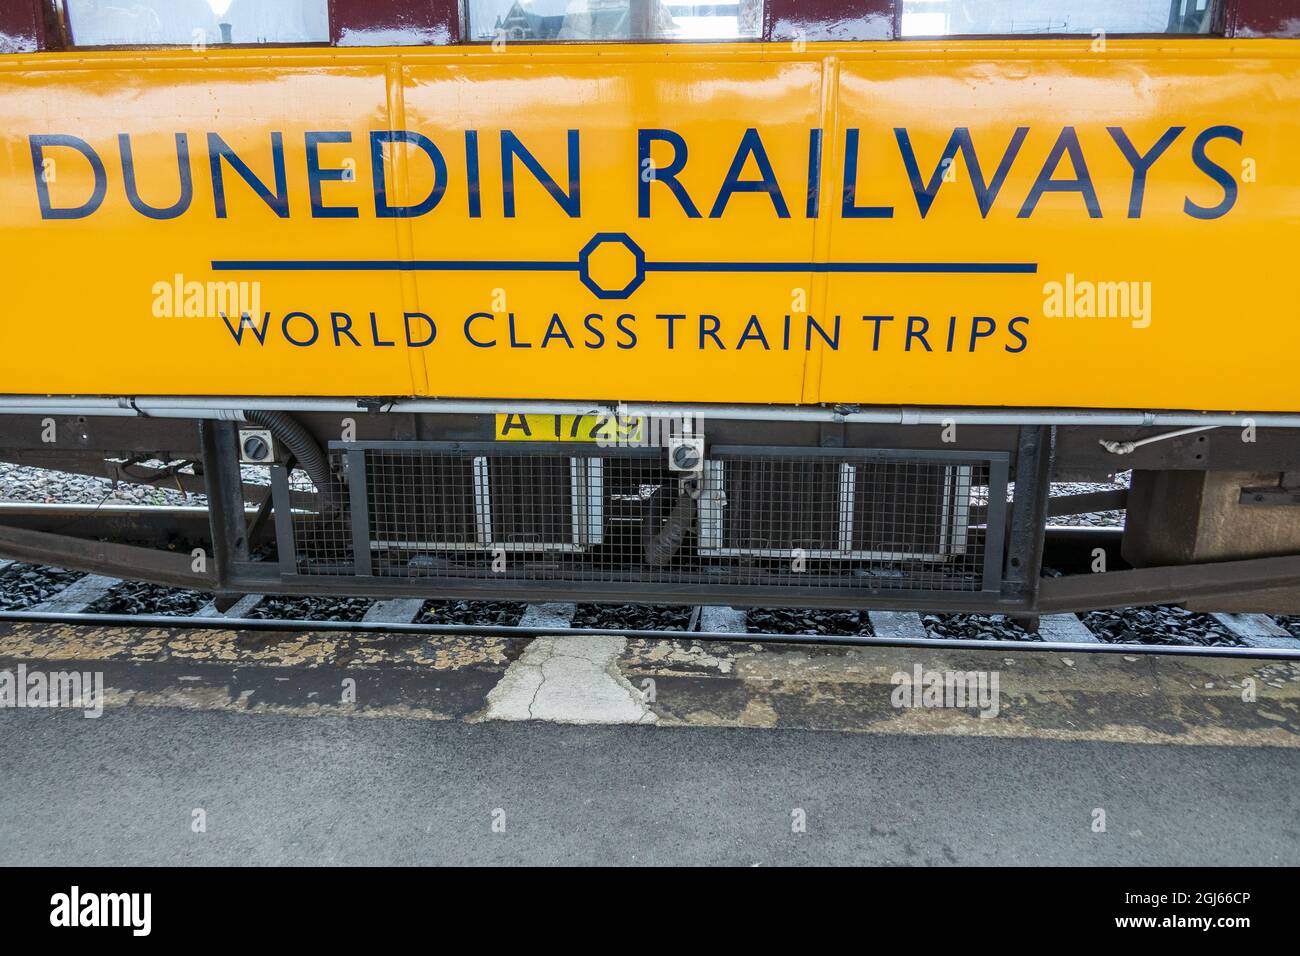 Yellow Dunedin Railways Sign On The Side Of The Passenger Carriage Car World Class Train Trips Dunedin Station New Zealand Stock Photo